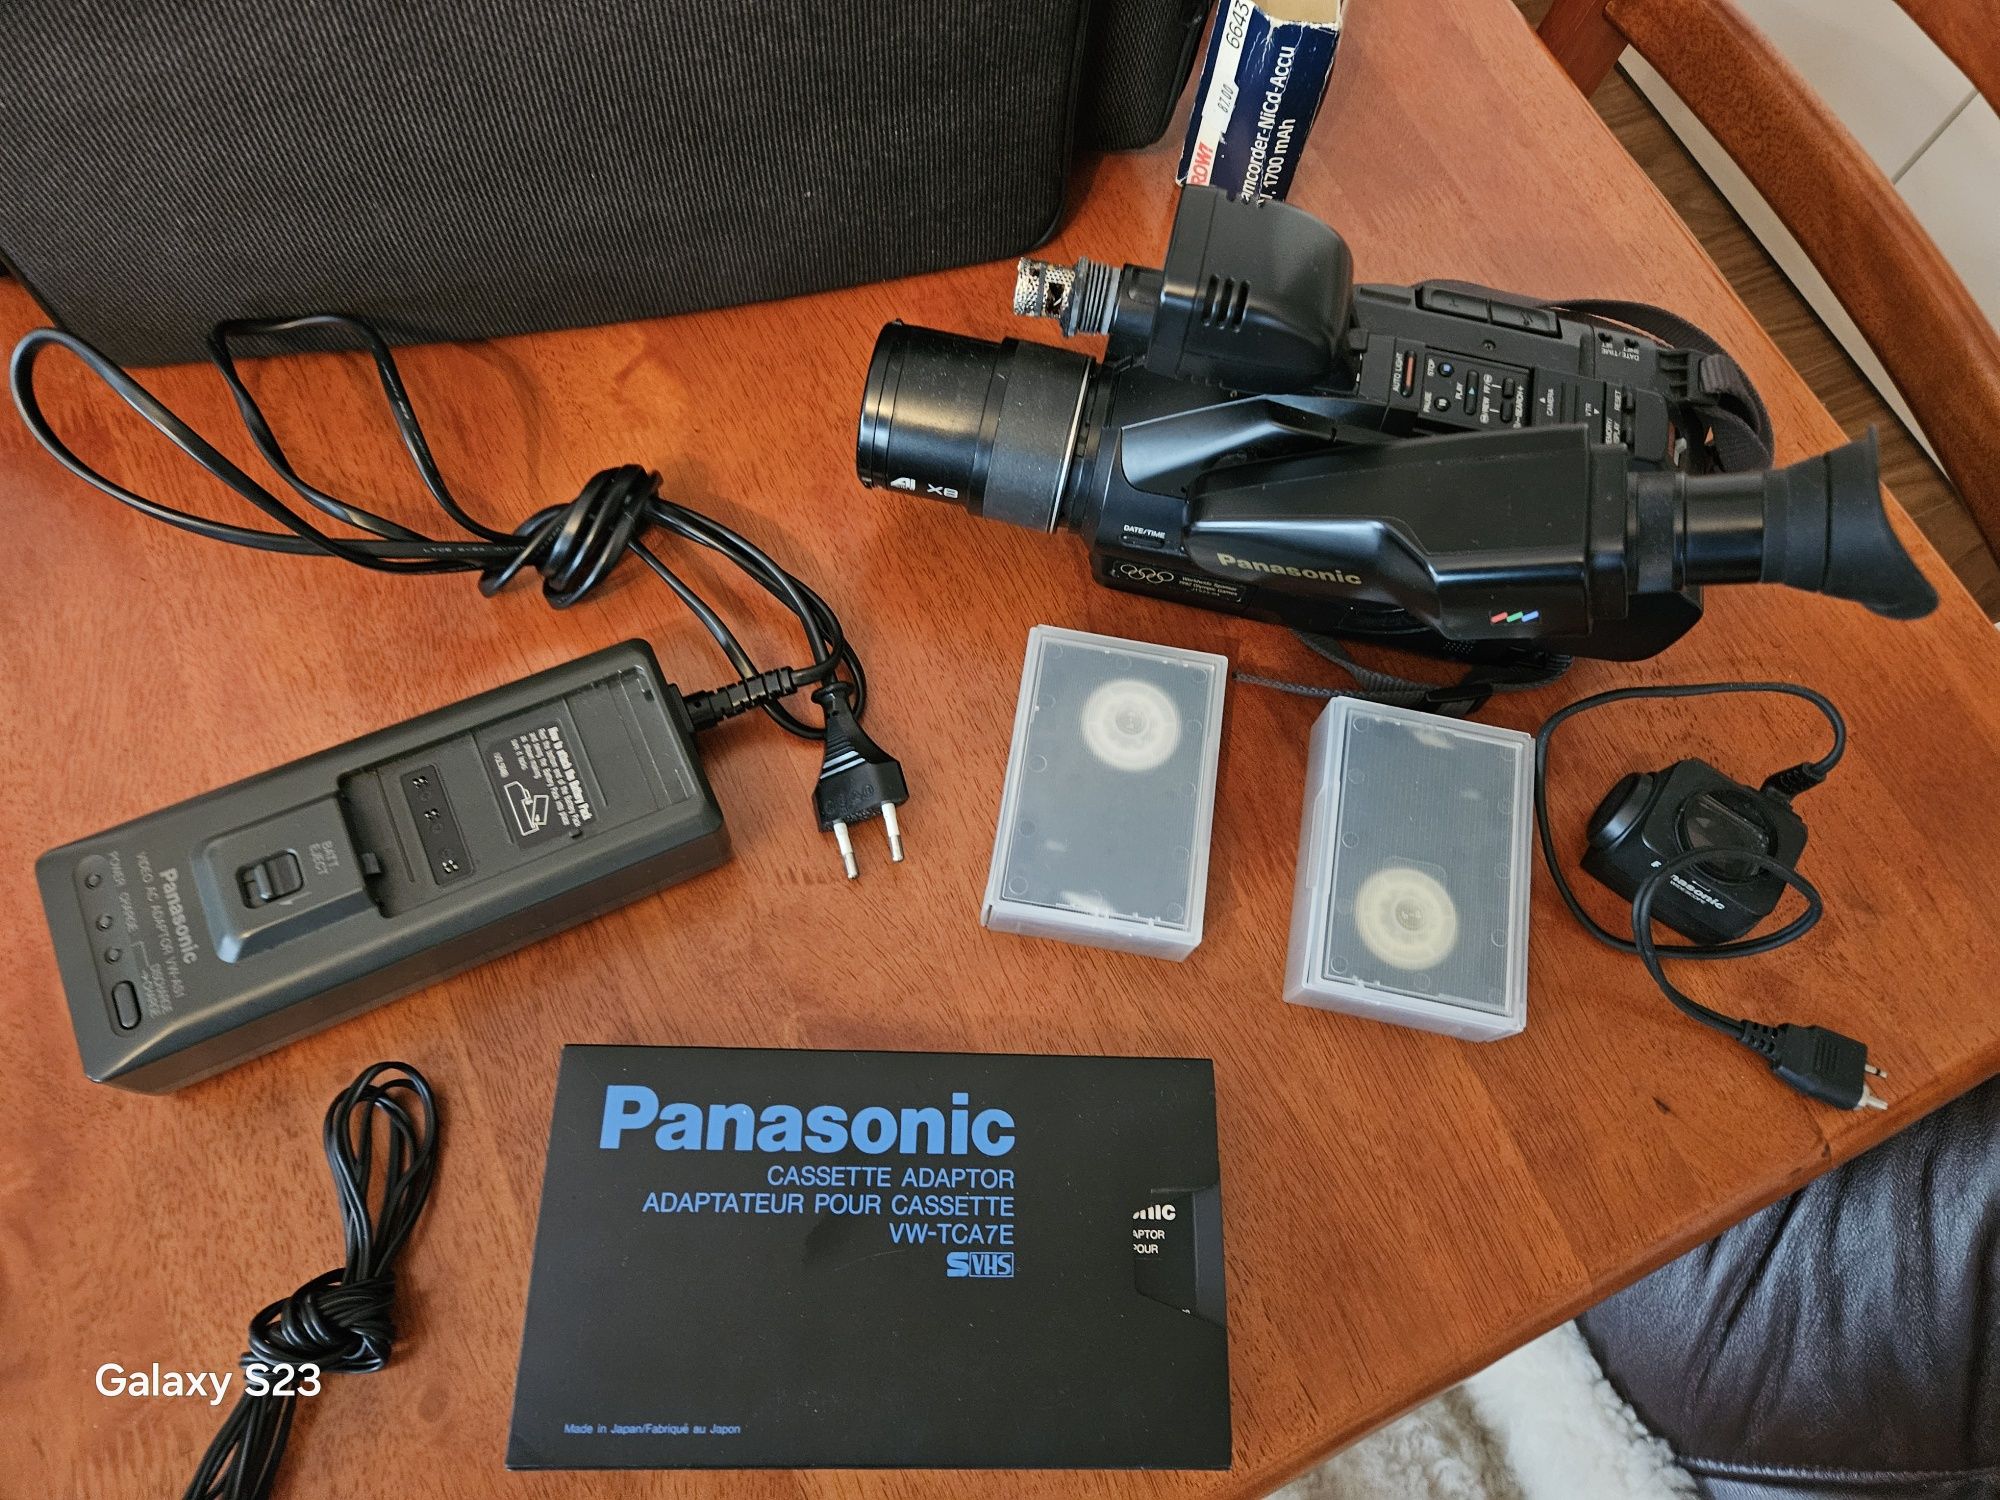 Bogaty Zestaw Panasonic do nagrywania na VHS